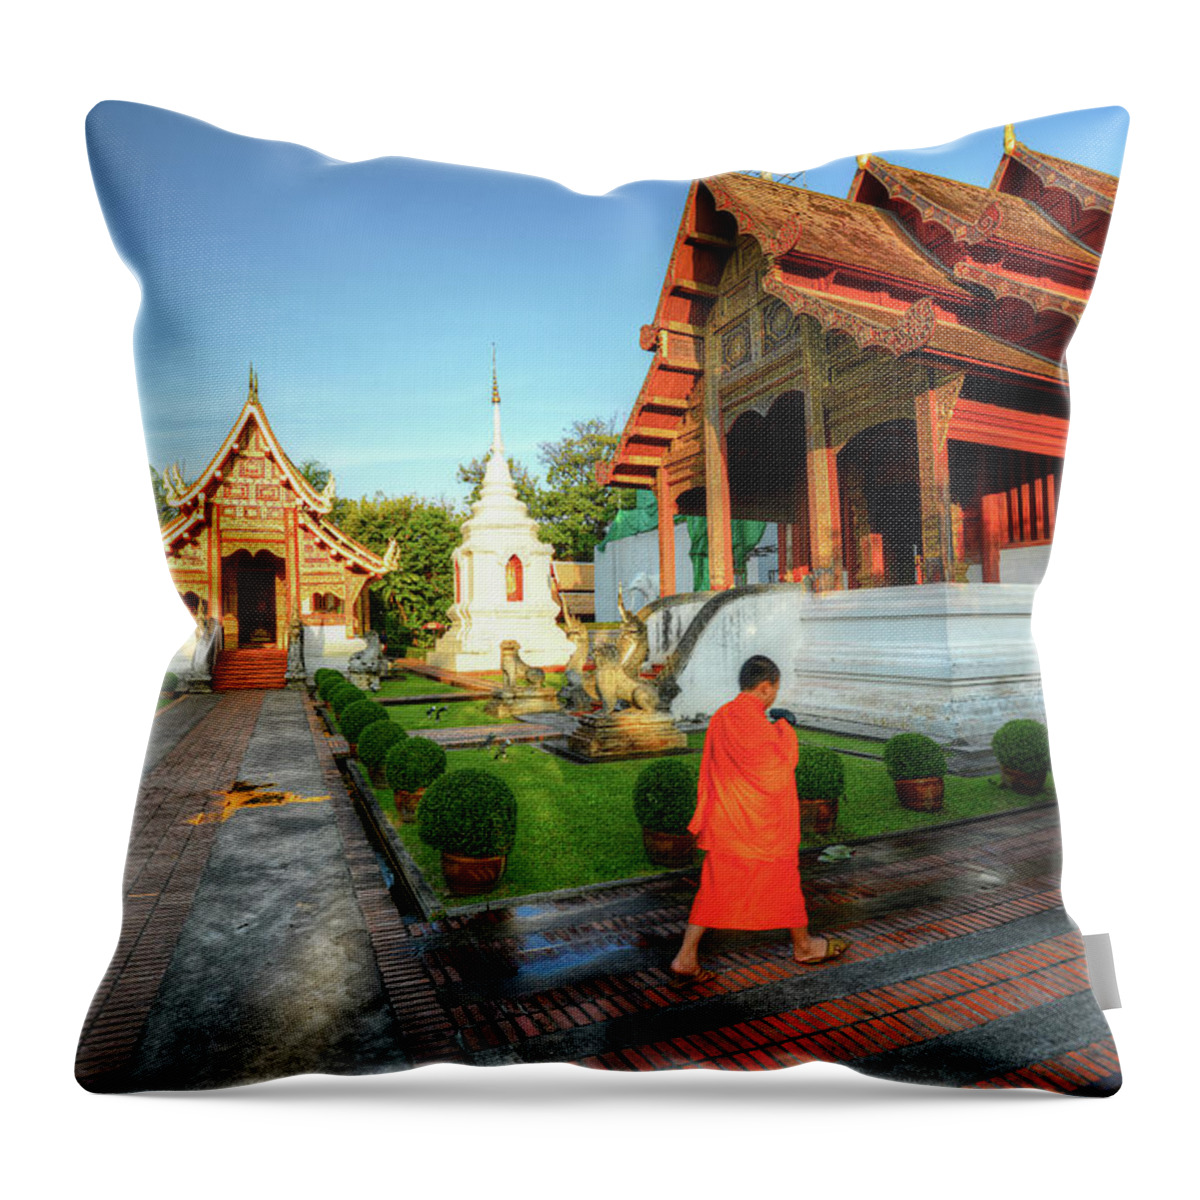 Wat Phra Sing Throw Pillow featuring the photograph Wat Phra Singh, Chiang Mai by Ashit Desai